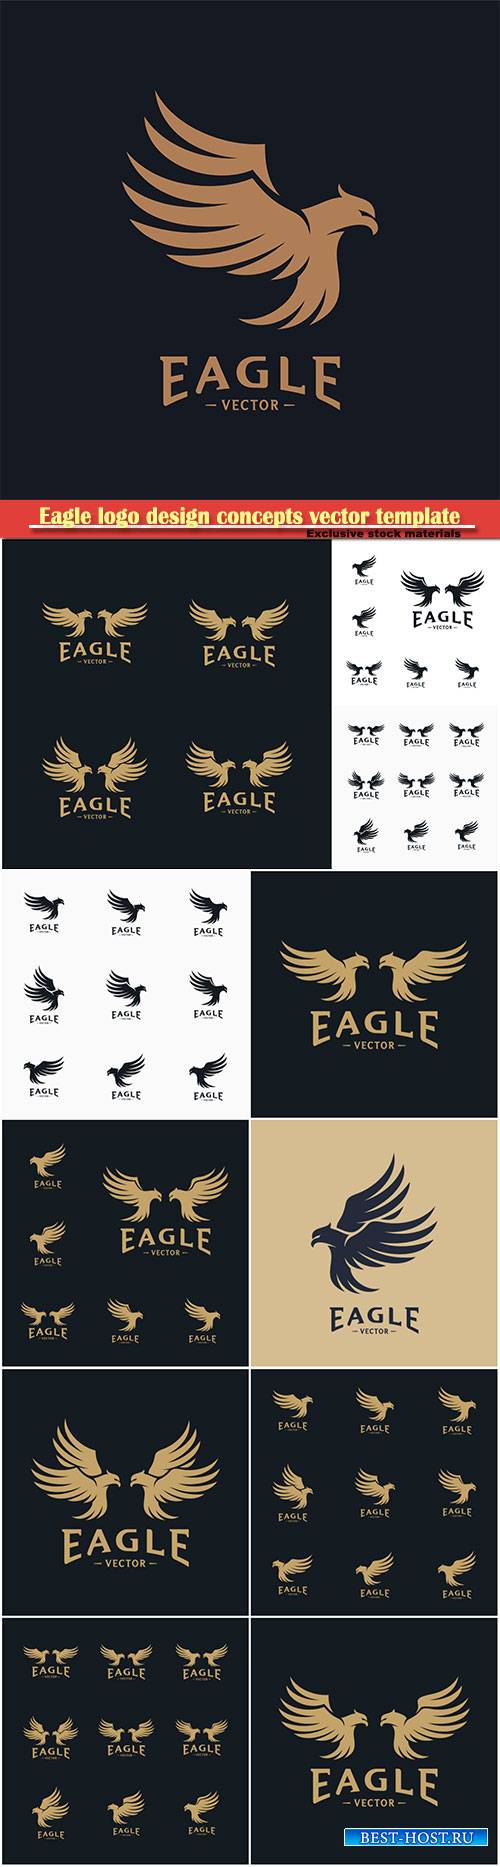 Eagle logo design concepts vector template, icon symbol